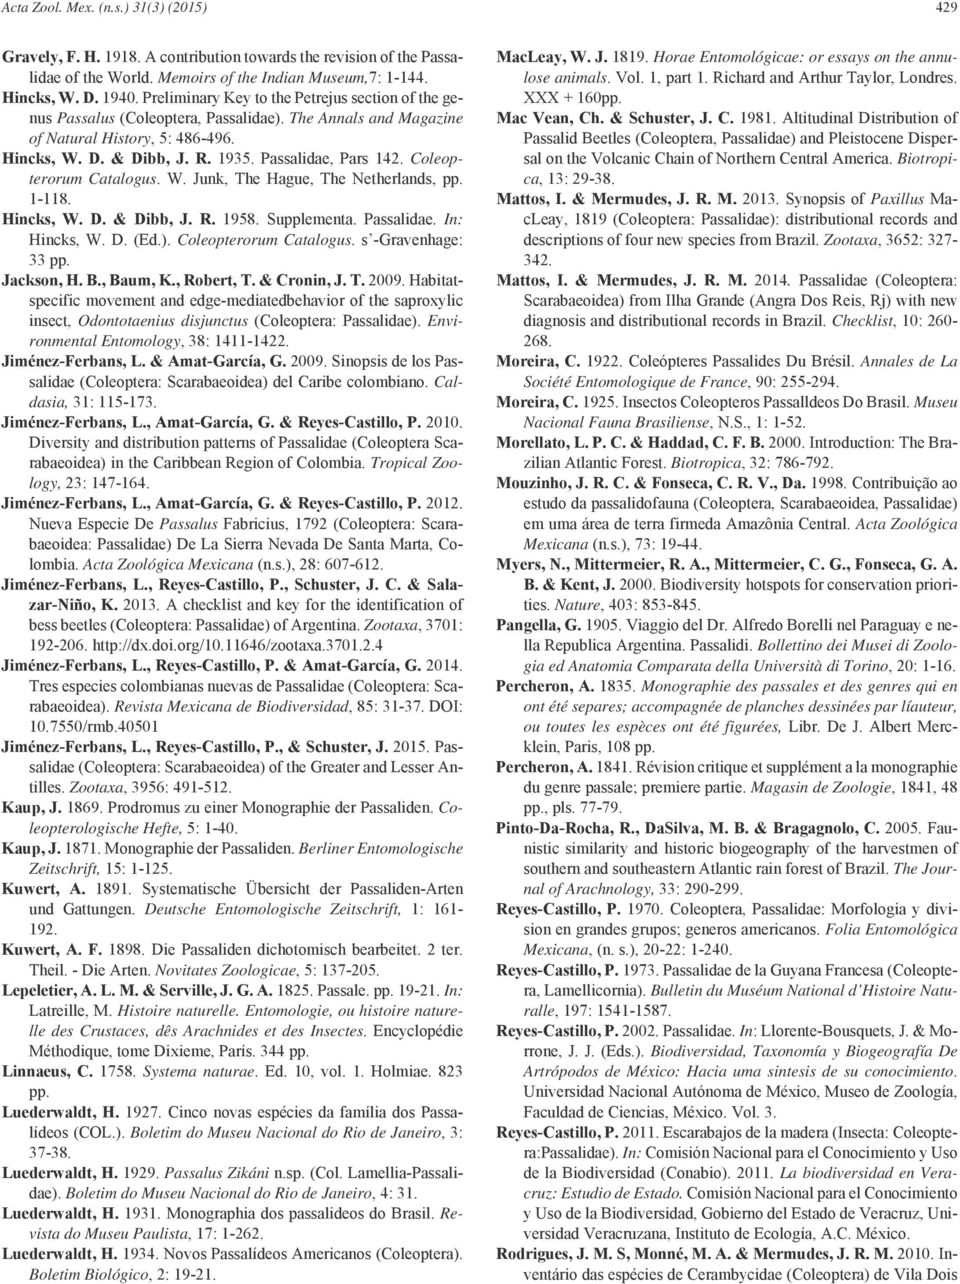 Coleopterorum Catalogus. W. Junk, The Hague, The Netherlands, pp. 1-118. Hincks, W. D. & Dibb, J. R. 1958. Supplementa. Passalidae. In: Hincks, W. D. (Ed.). Coleopterorum Catalogus.